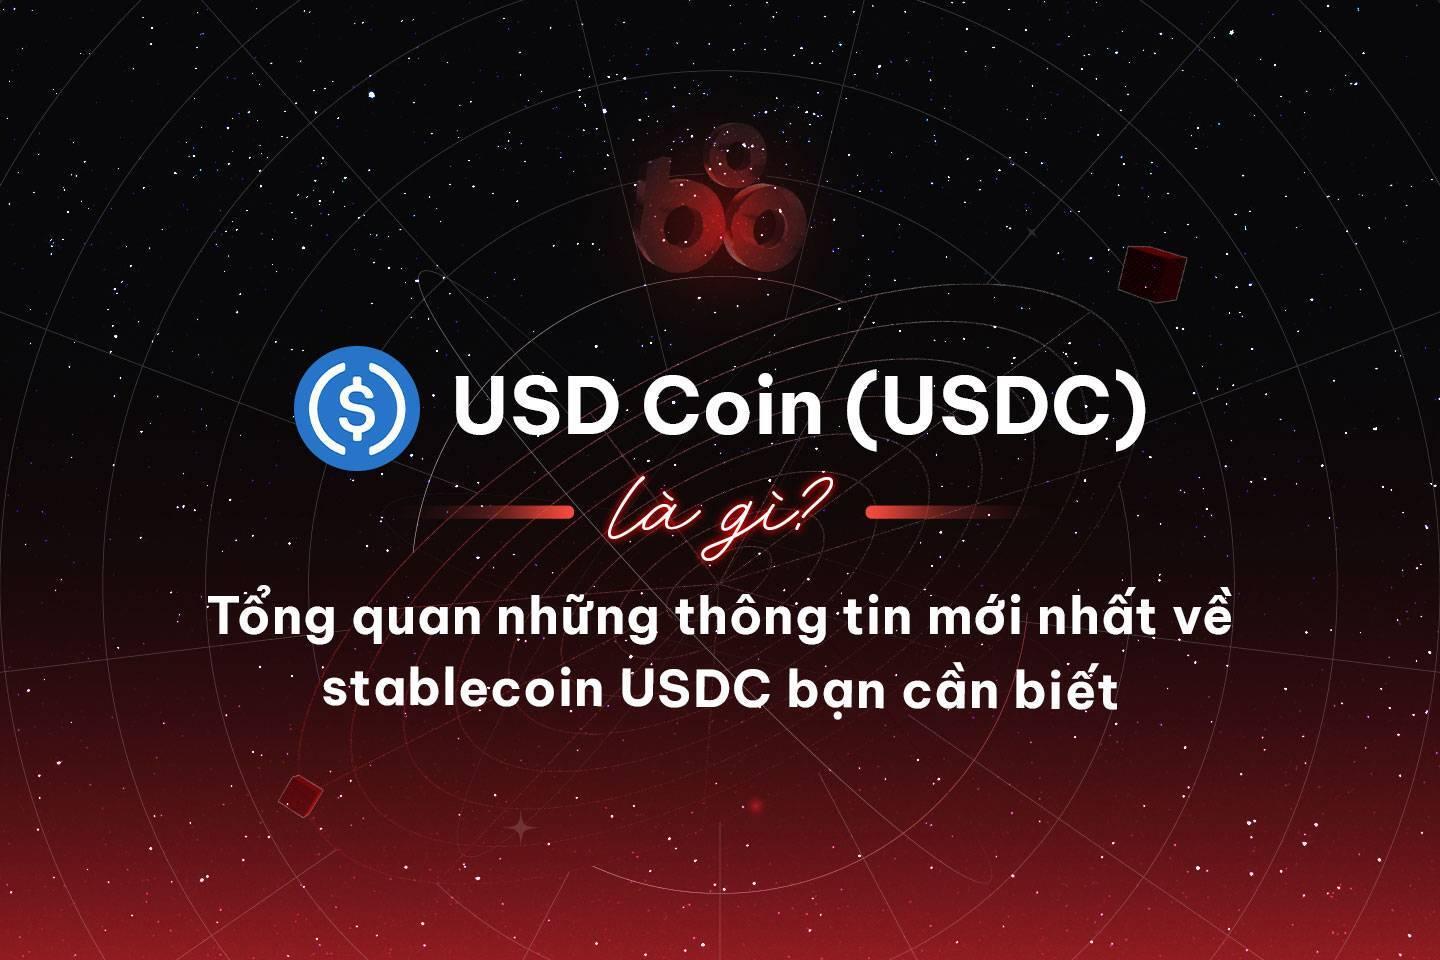 usd-coin-usdc-la-gi-tong-quan-nhung-thong-tin-moi-nhat-ve-stablecoin-usdc-ban-can-biet